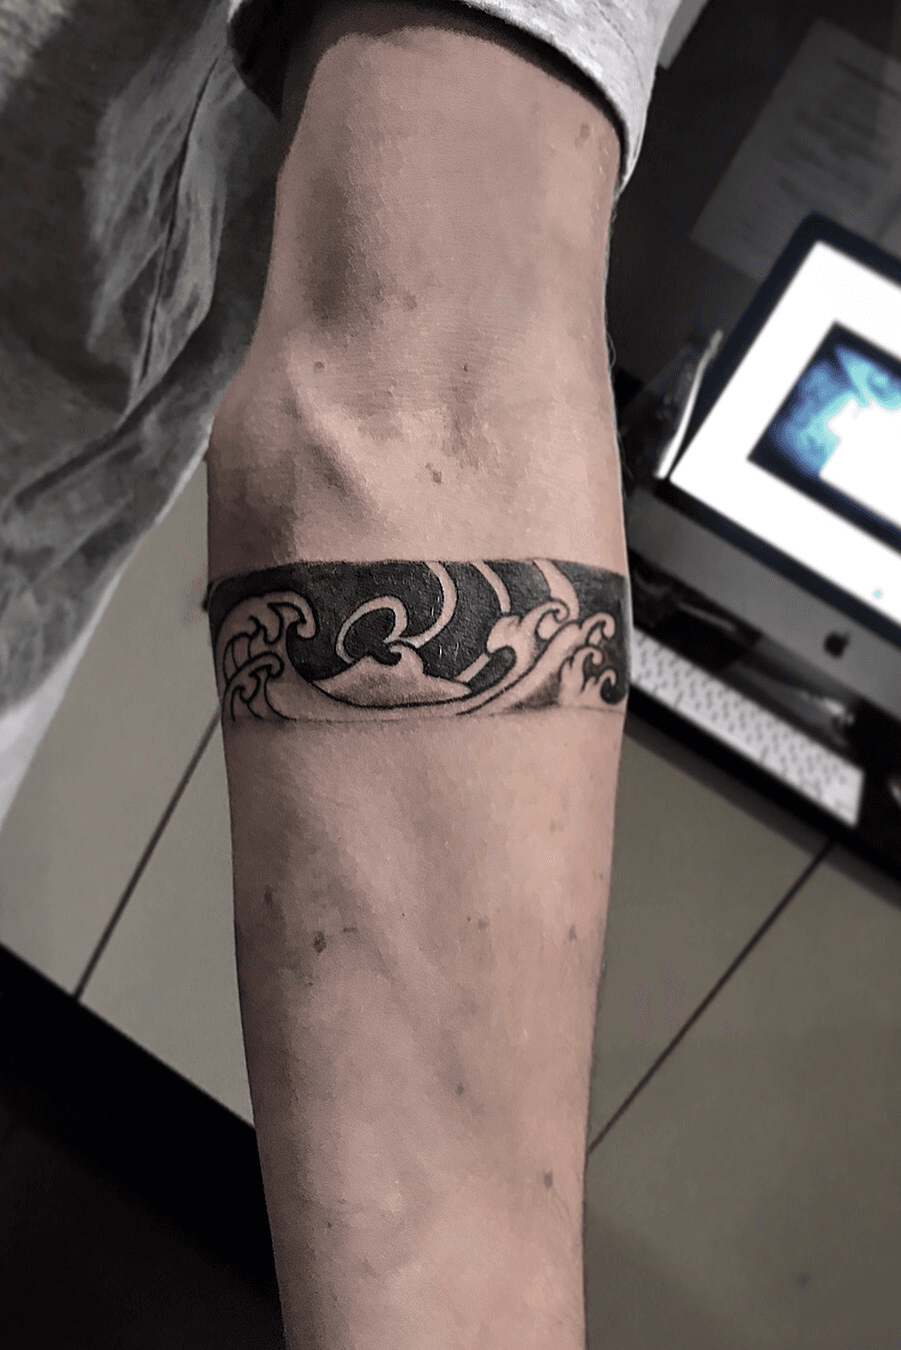 Tattoo  Japanese Tattoo Armband using Coil Tattoo Machine  Colored Ink   YouTube